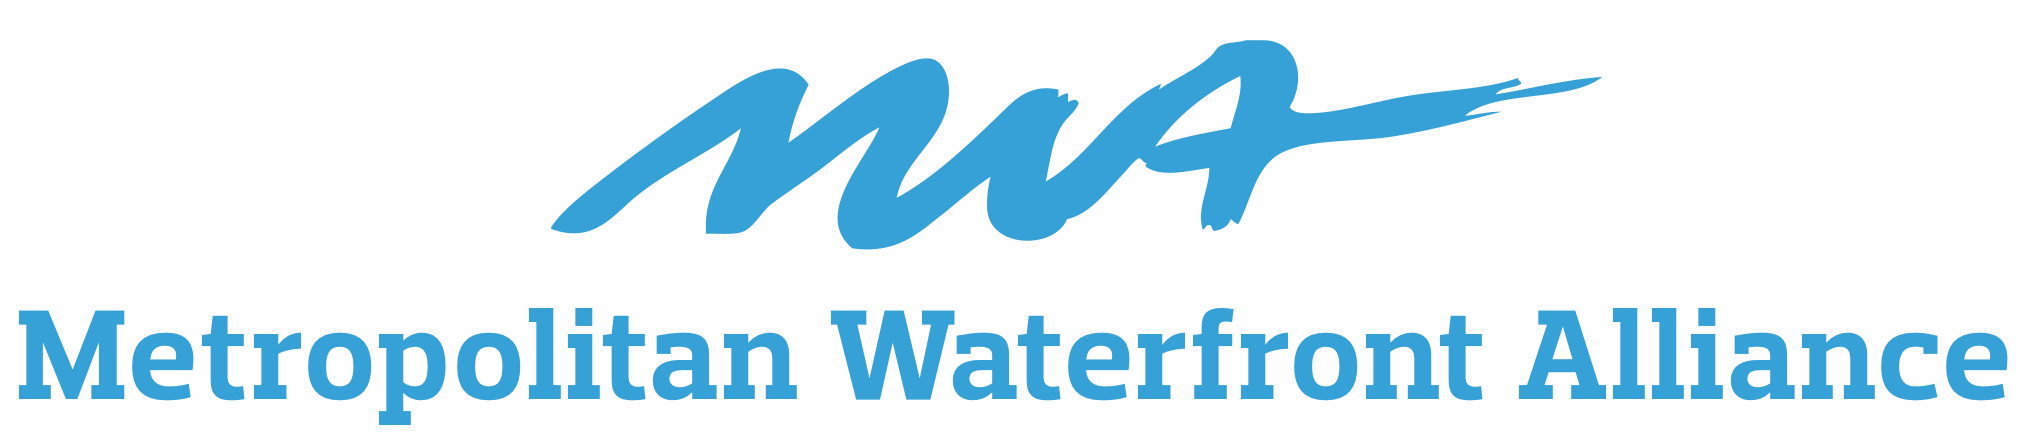 Metropolitan_Waterfront_Alliance_logo